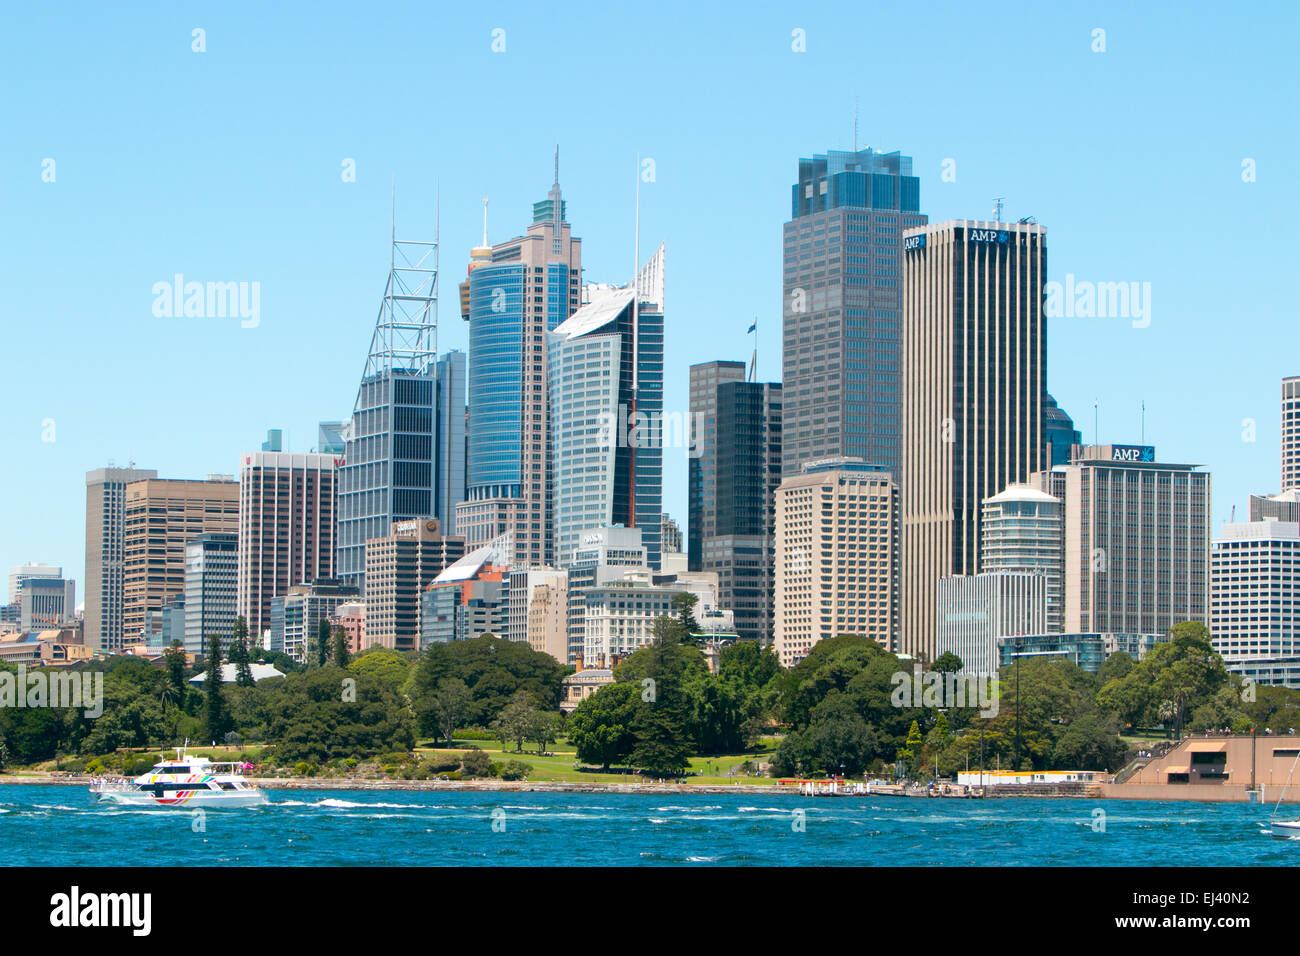 Sydney central business district skyline cityscape visto dal porto di Sydney Australia Foto Stock